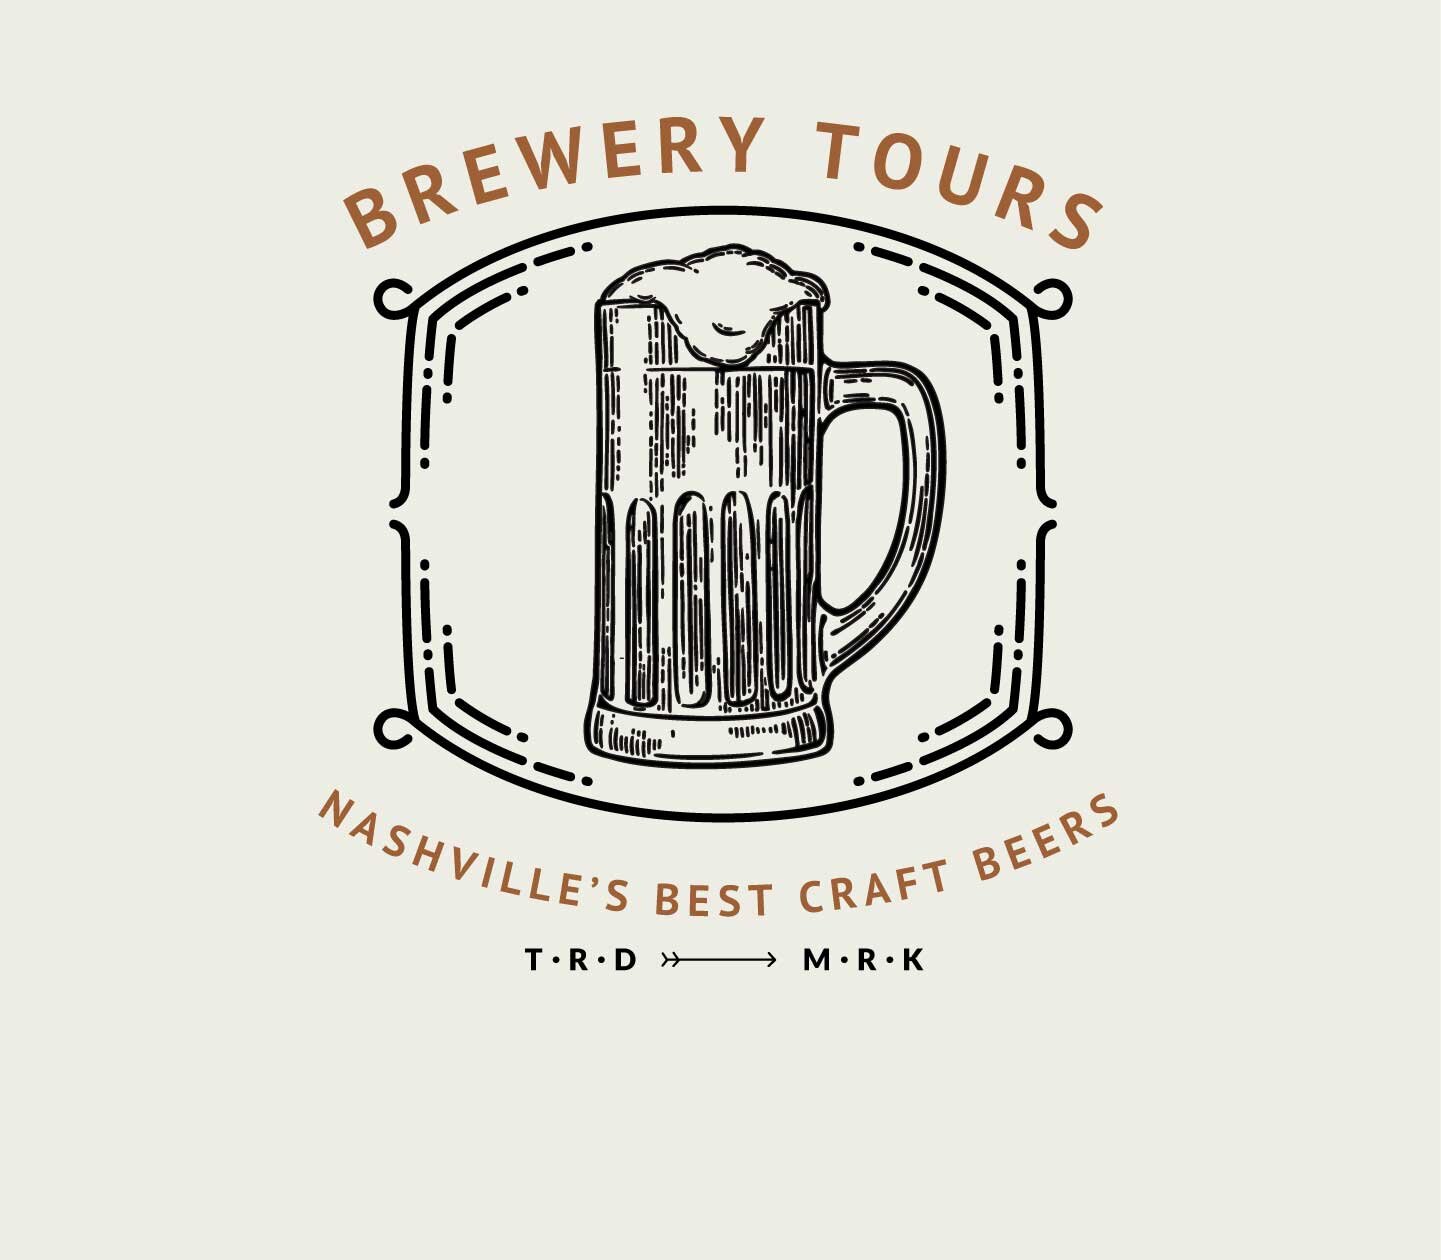 menu-nashville-brewery-tours-1.jpg